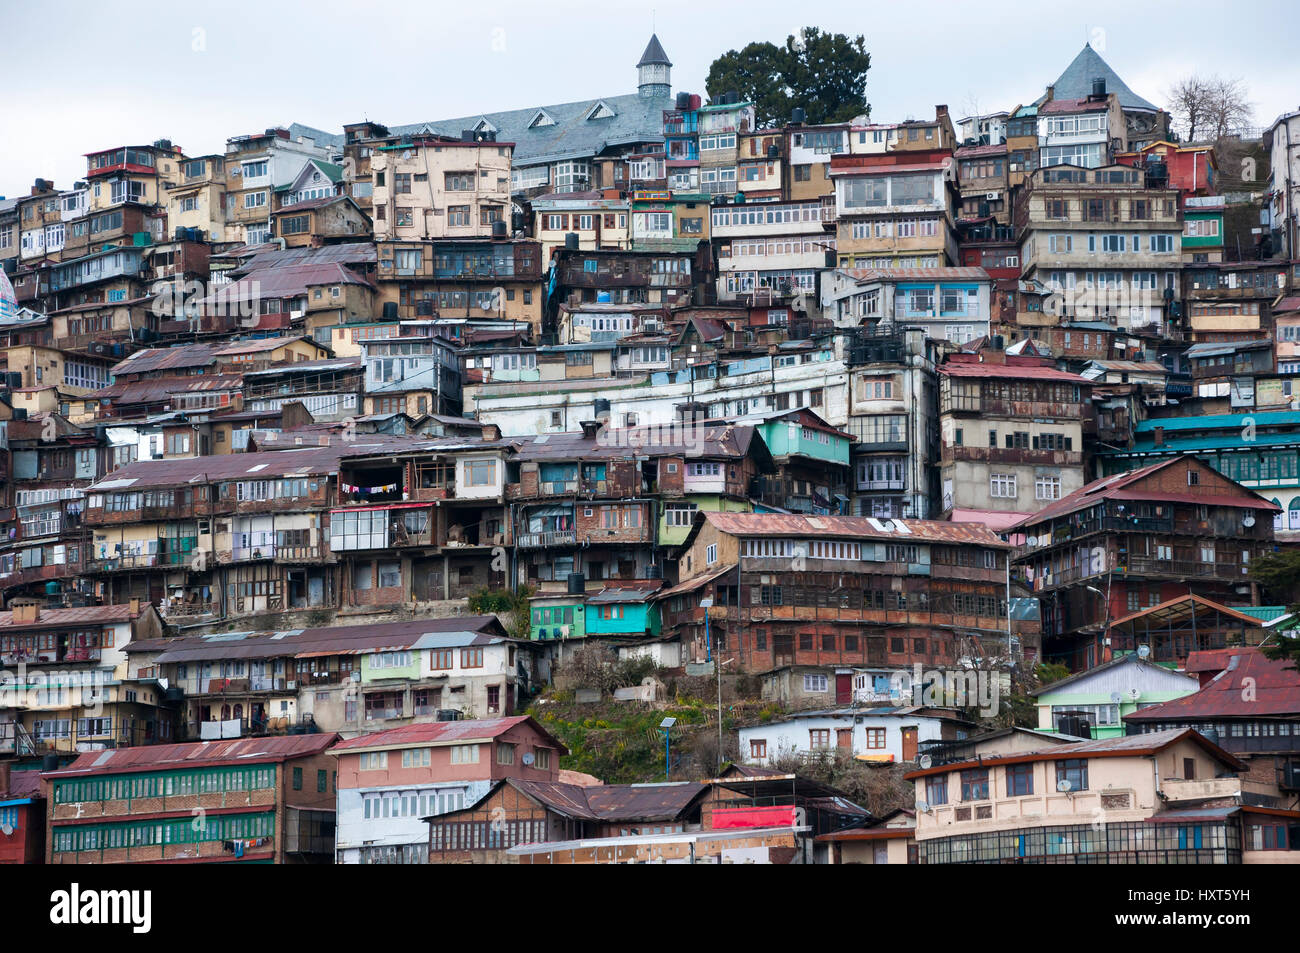 Crowded housing on the hillside in Shimla, Himachal Pradesh, India. Stock Photo